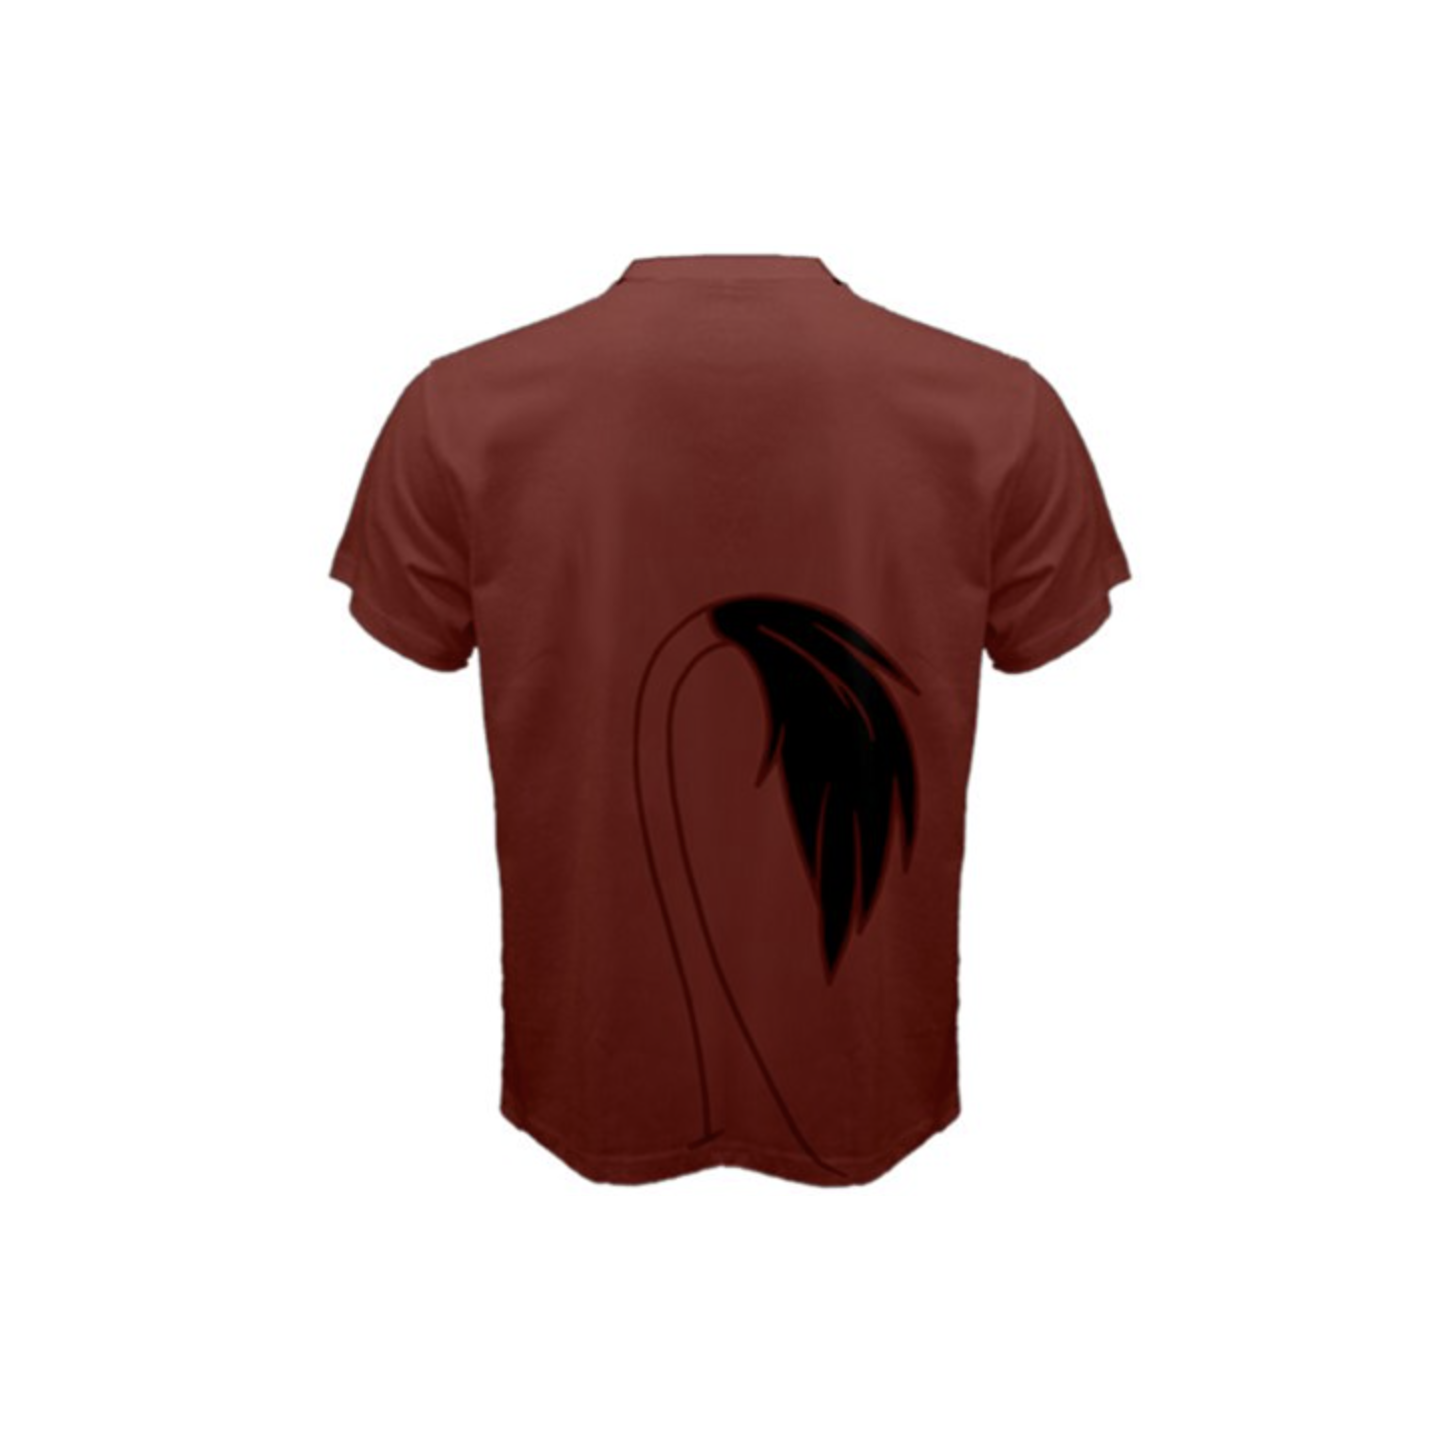 Men's Pumbaa Inspired ATHLETIC Shirt